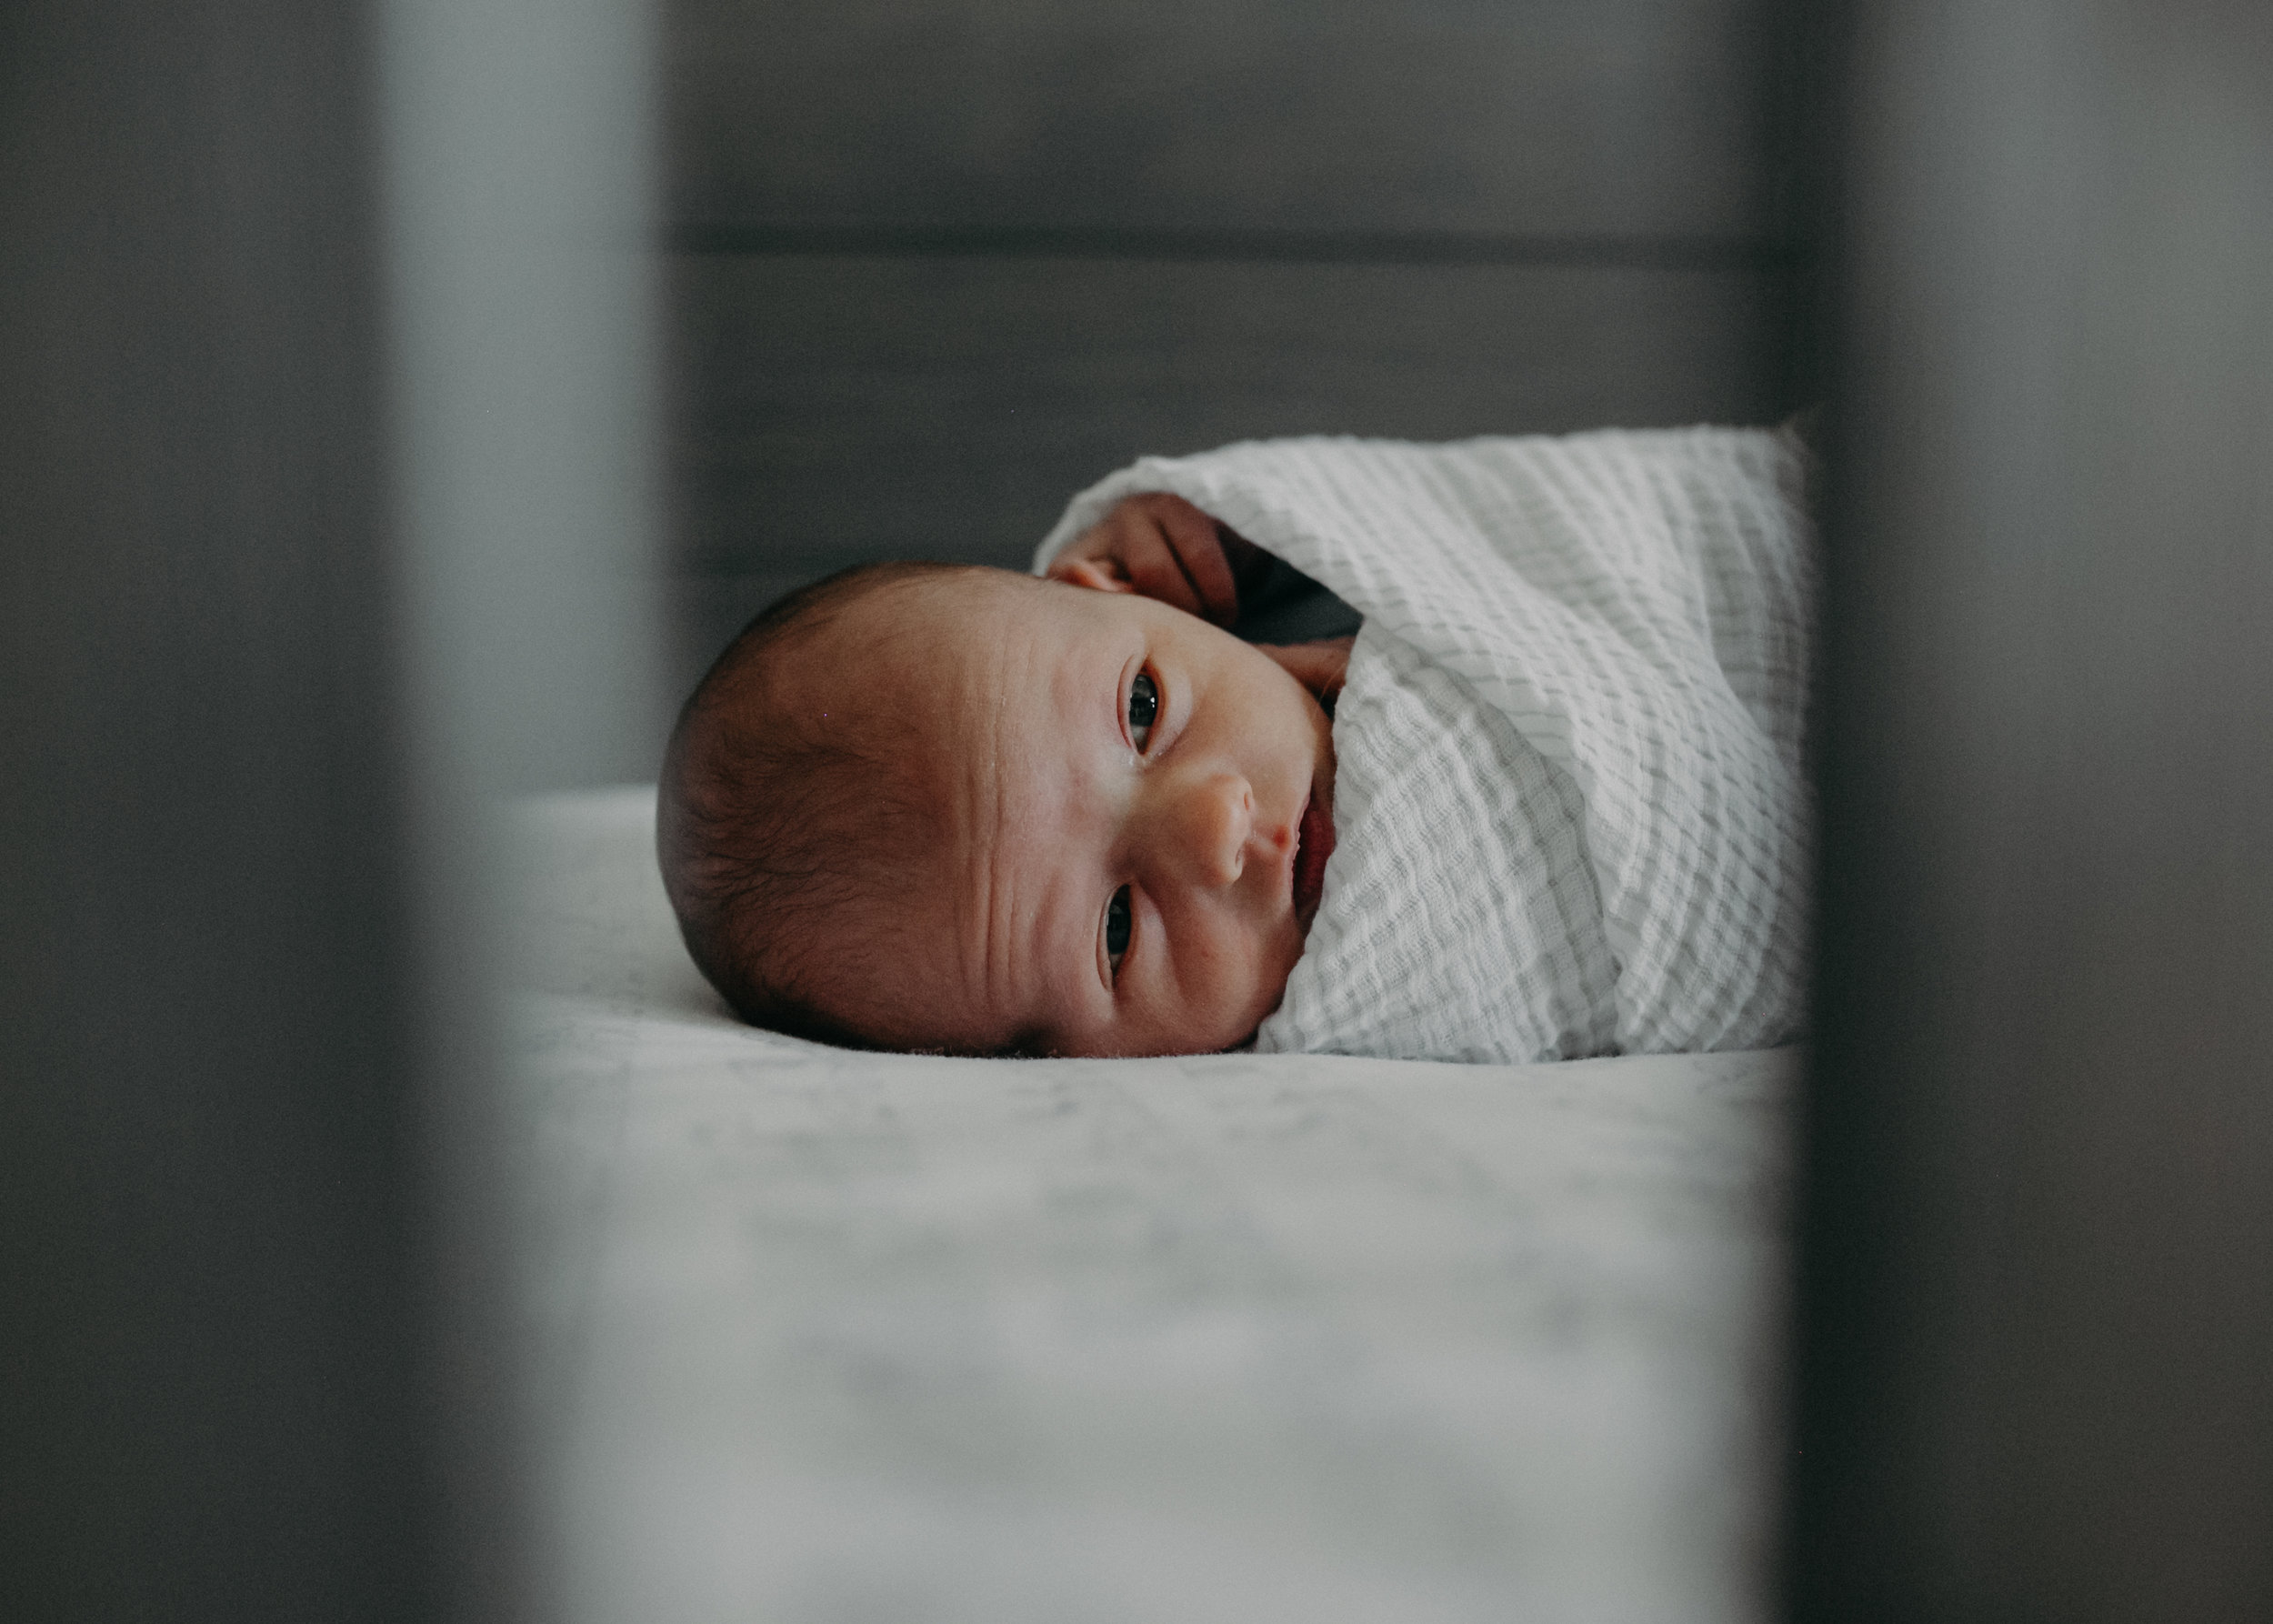  Chaska MN newborn baby boy in crib wrapped in muslin 